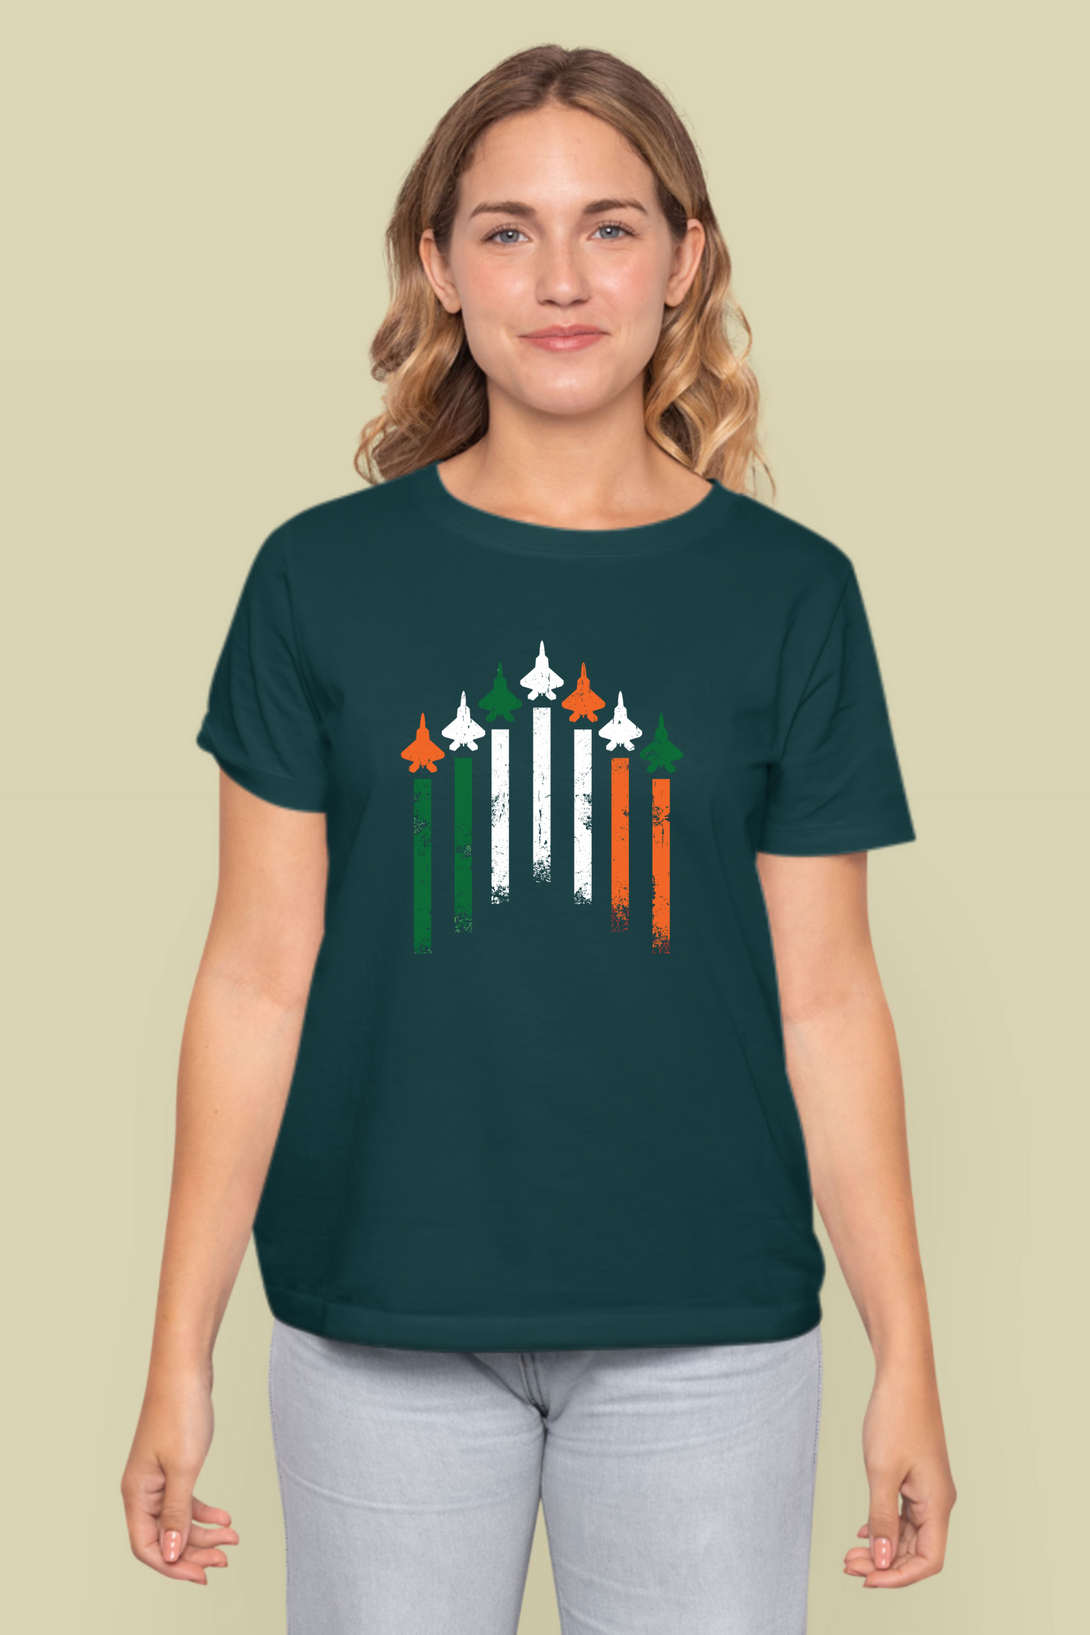 Italian National Printed T-Shirt For Women - WowWaves - 8